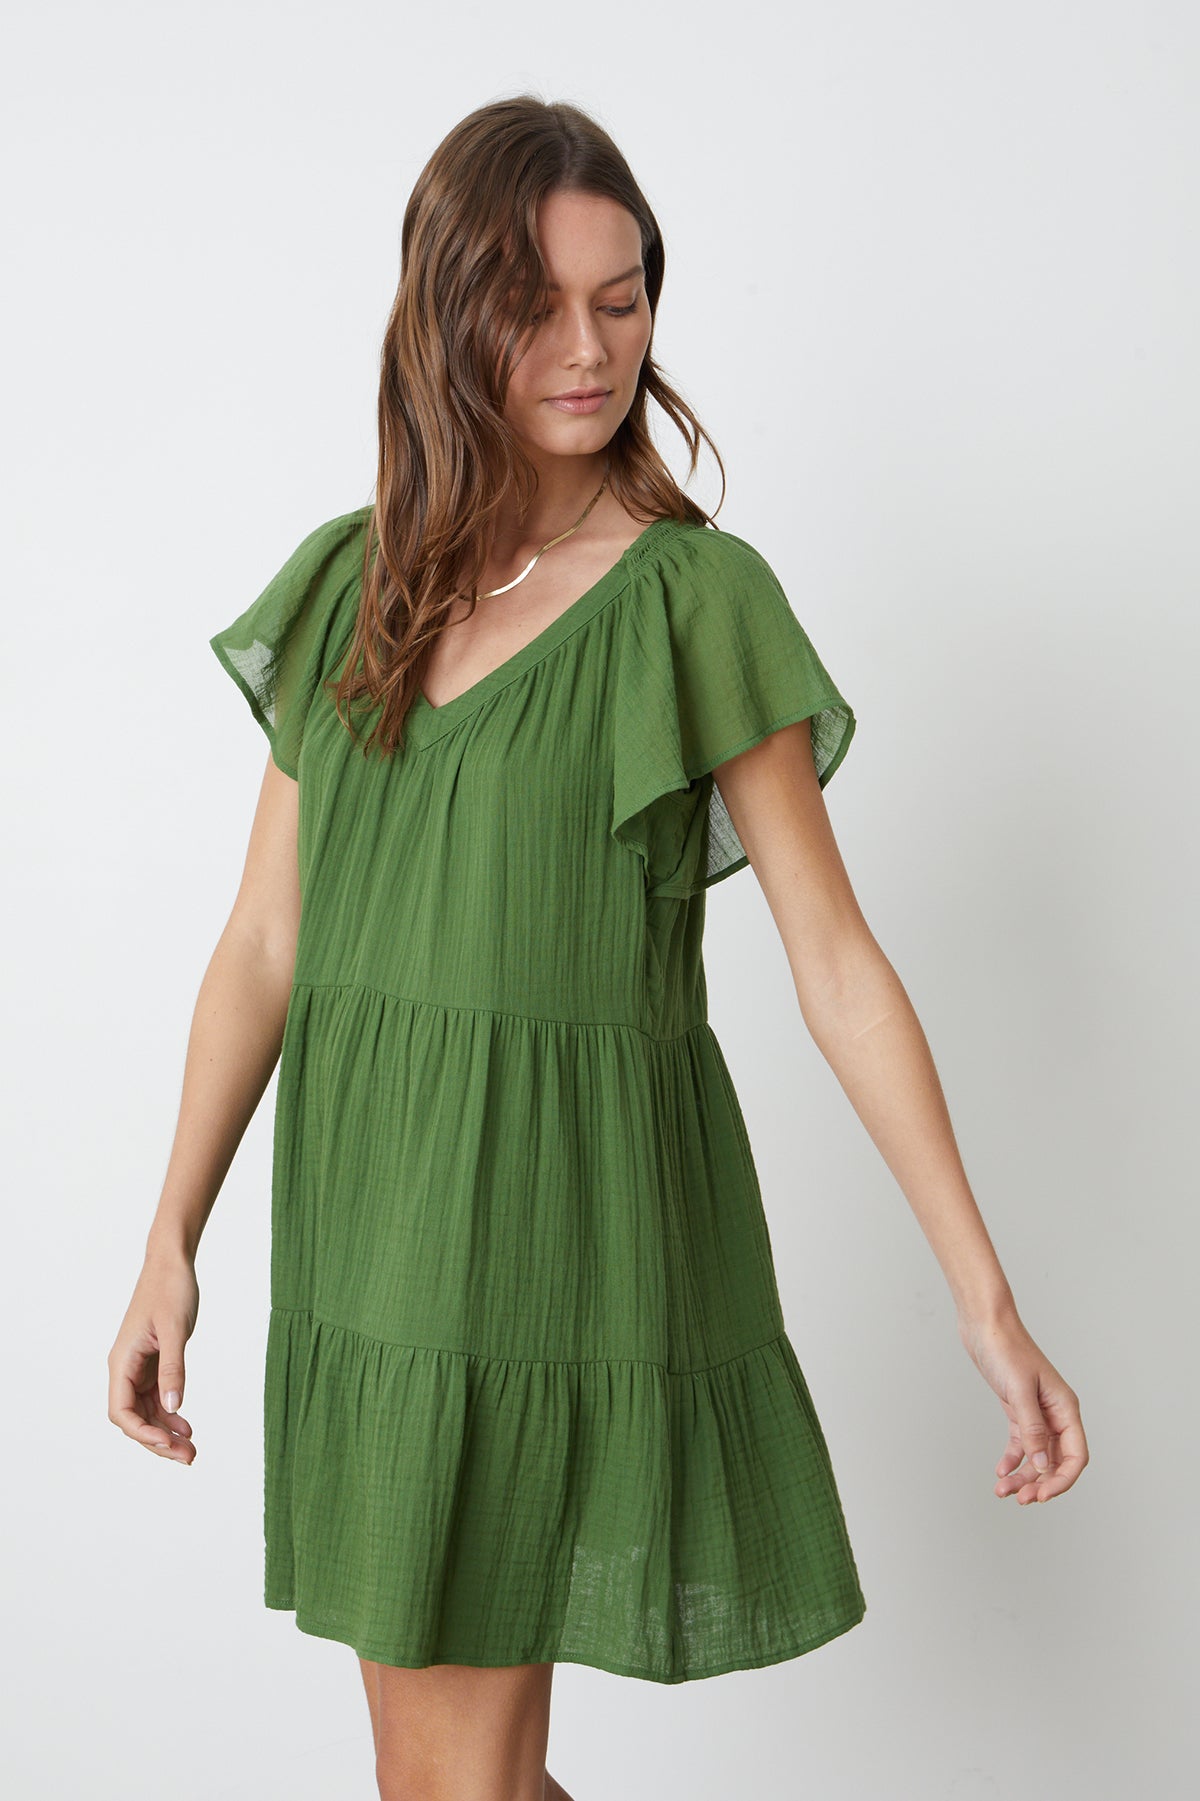  Eleanor Tiered Dress in garden green cotton gauze front & side-26262138159297